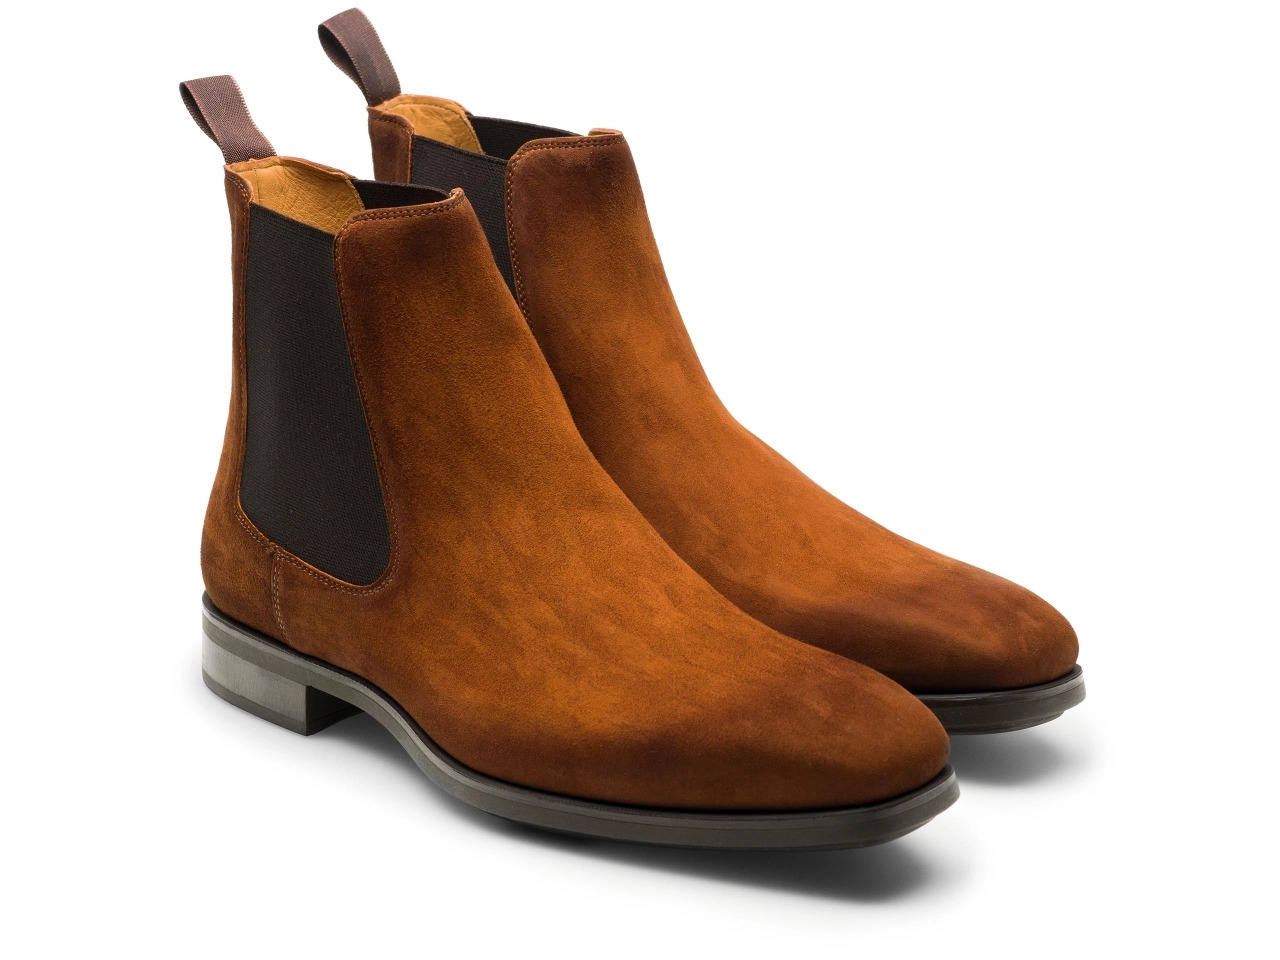 Magnanni boots